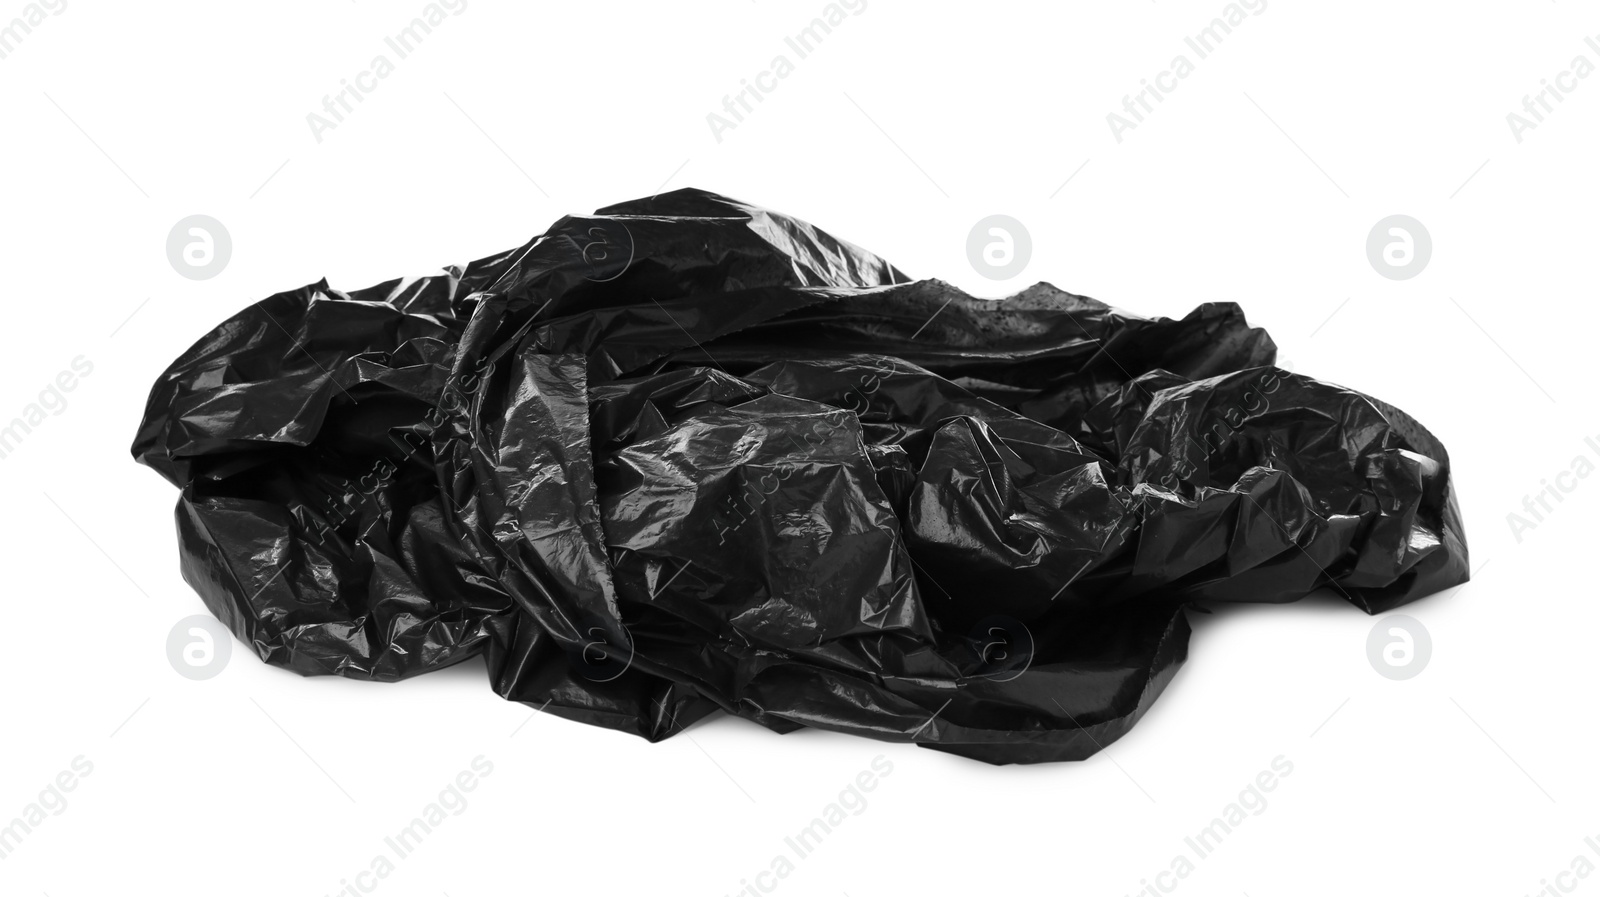 Photo of Used black plastic bag isolated on white